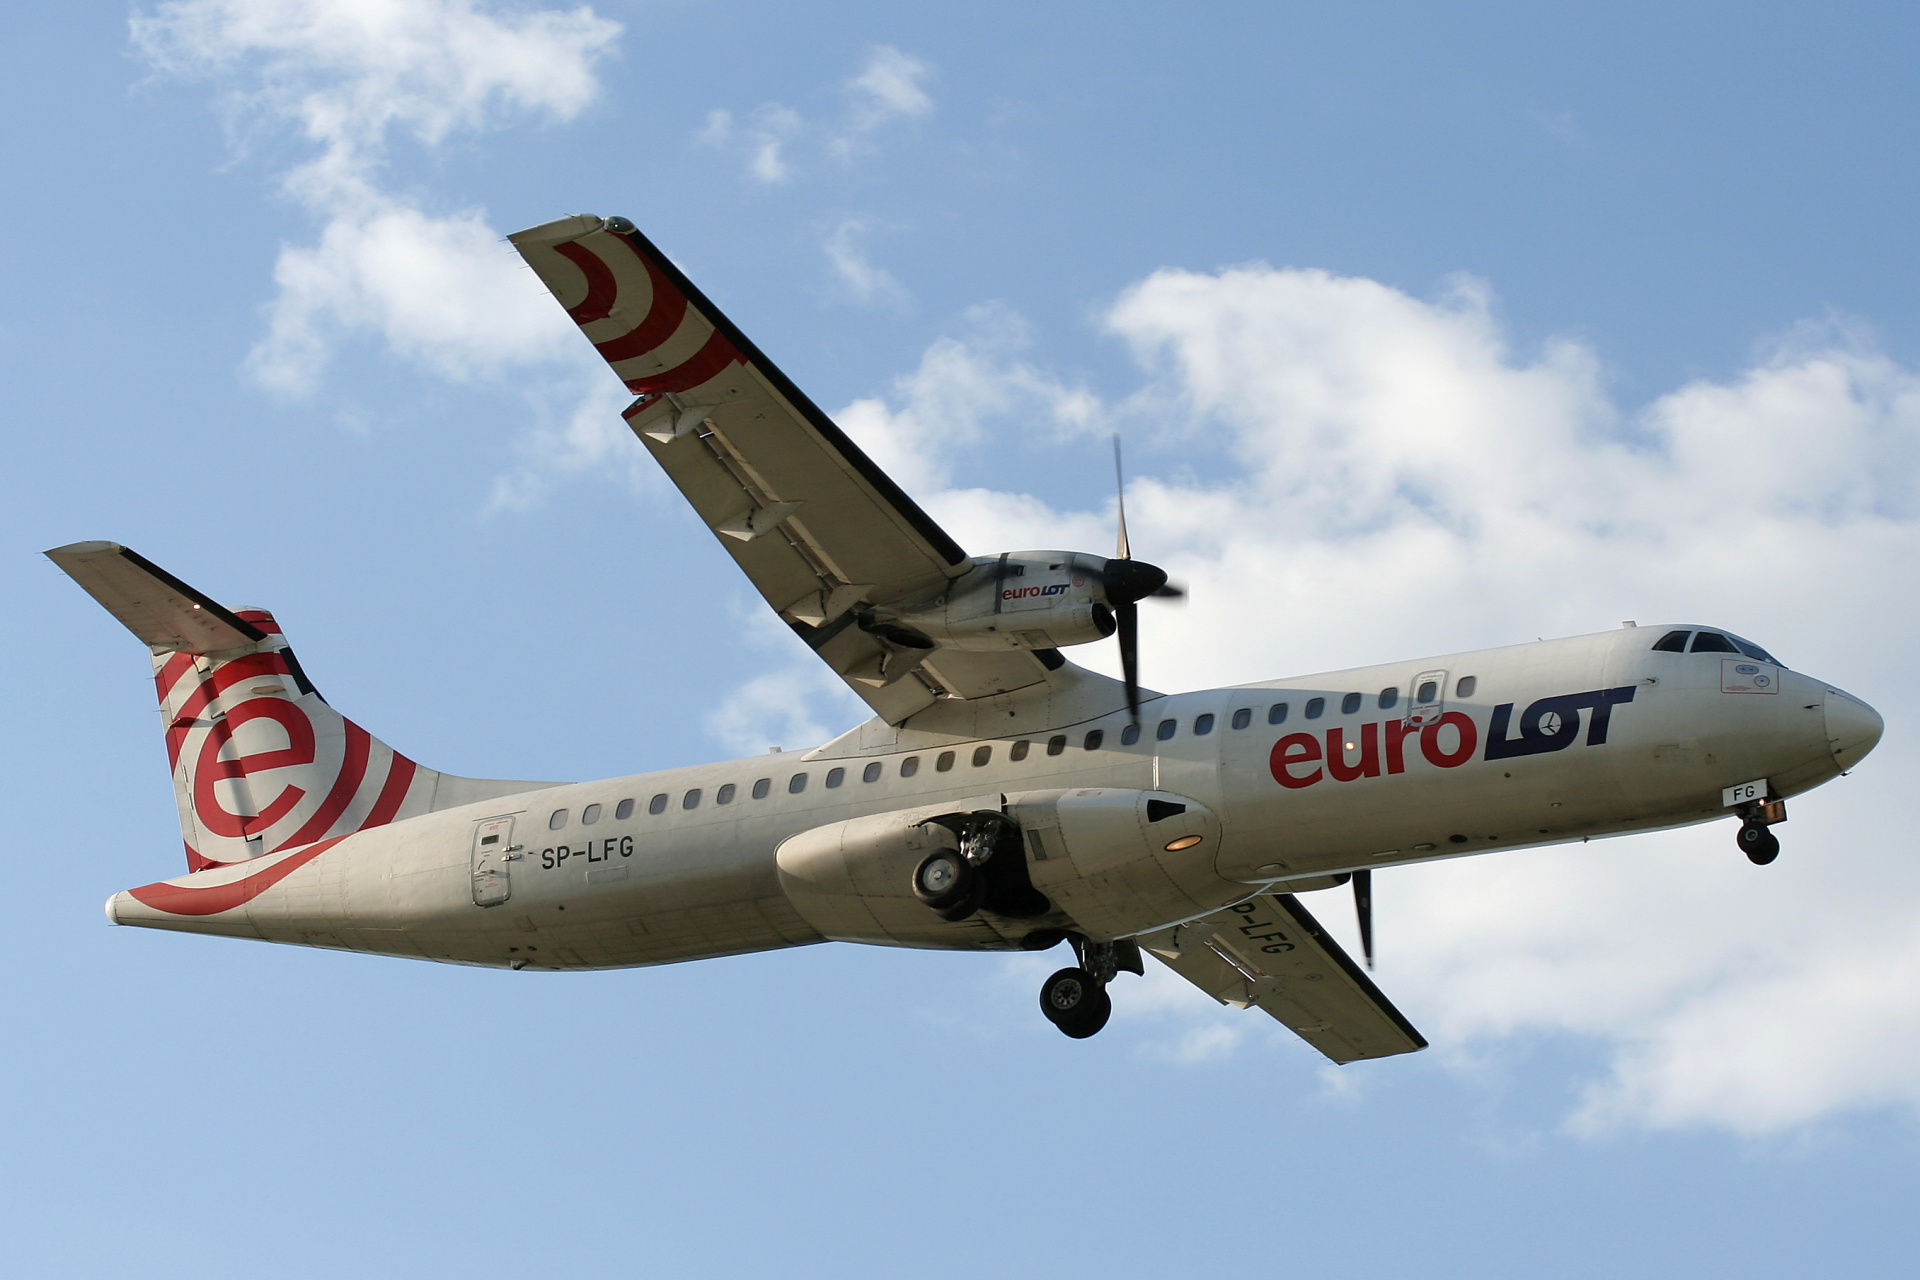 SP-LFG (Samoloty » Spotting na EPWA » ATR 72 » EuroLOT)